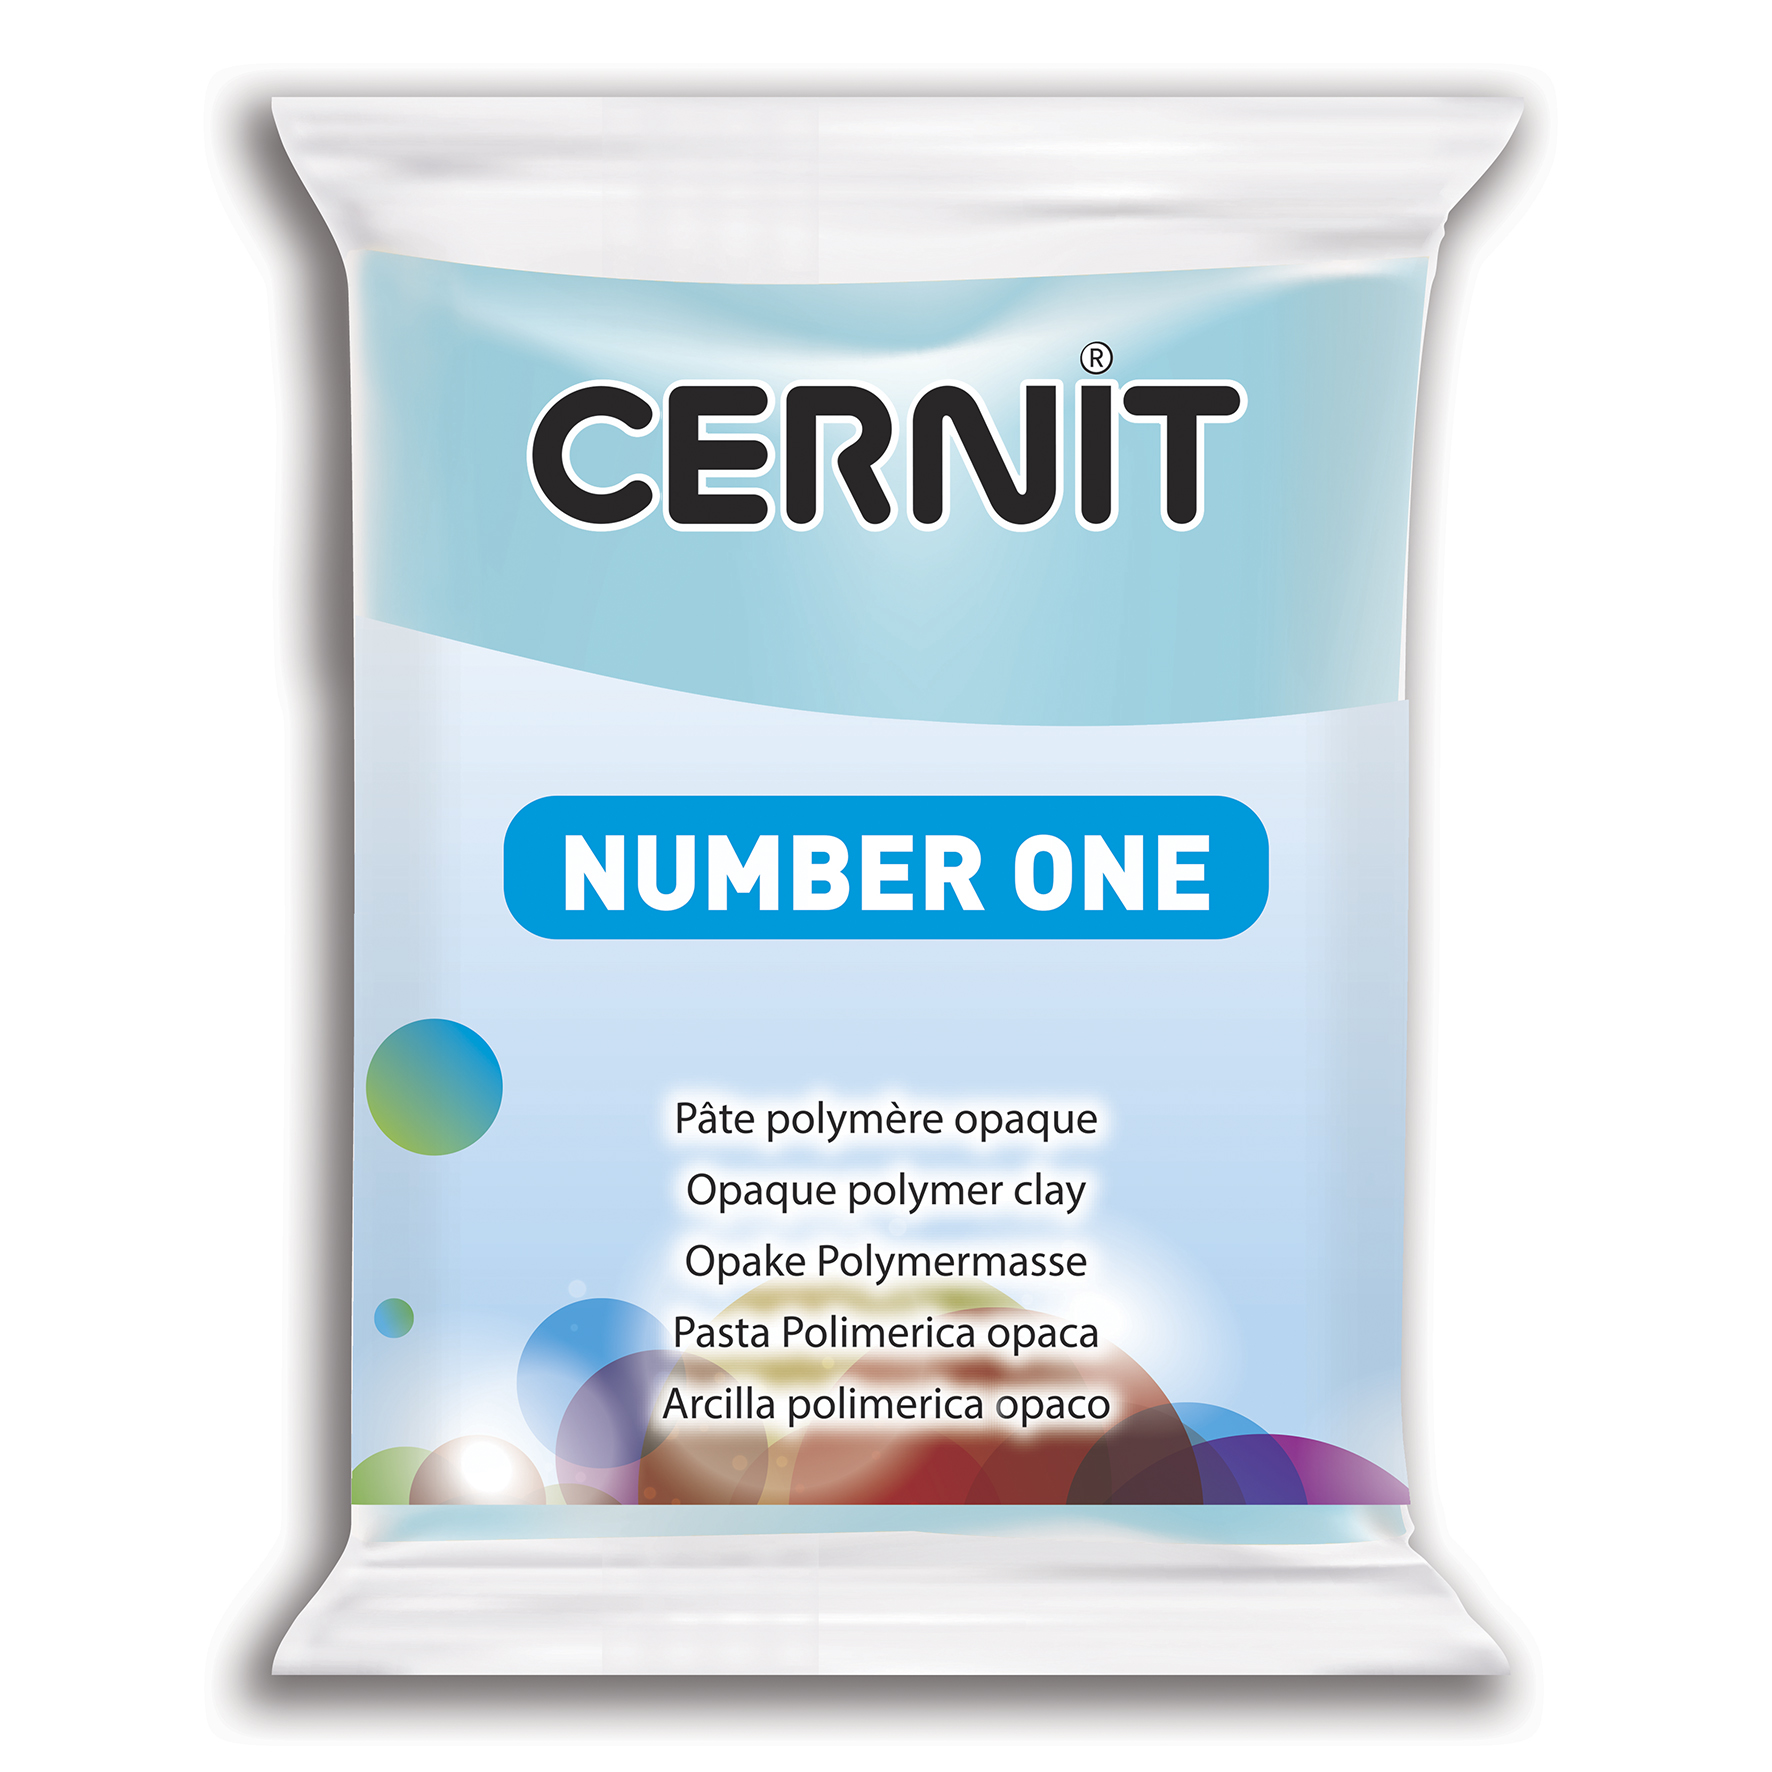 Kit de 10 colores de arcilla polimérica Cernit